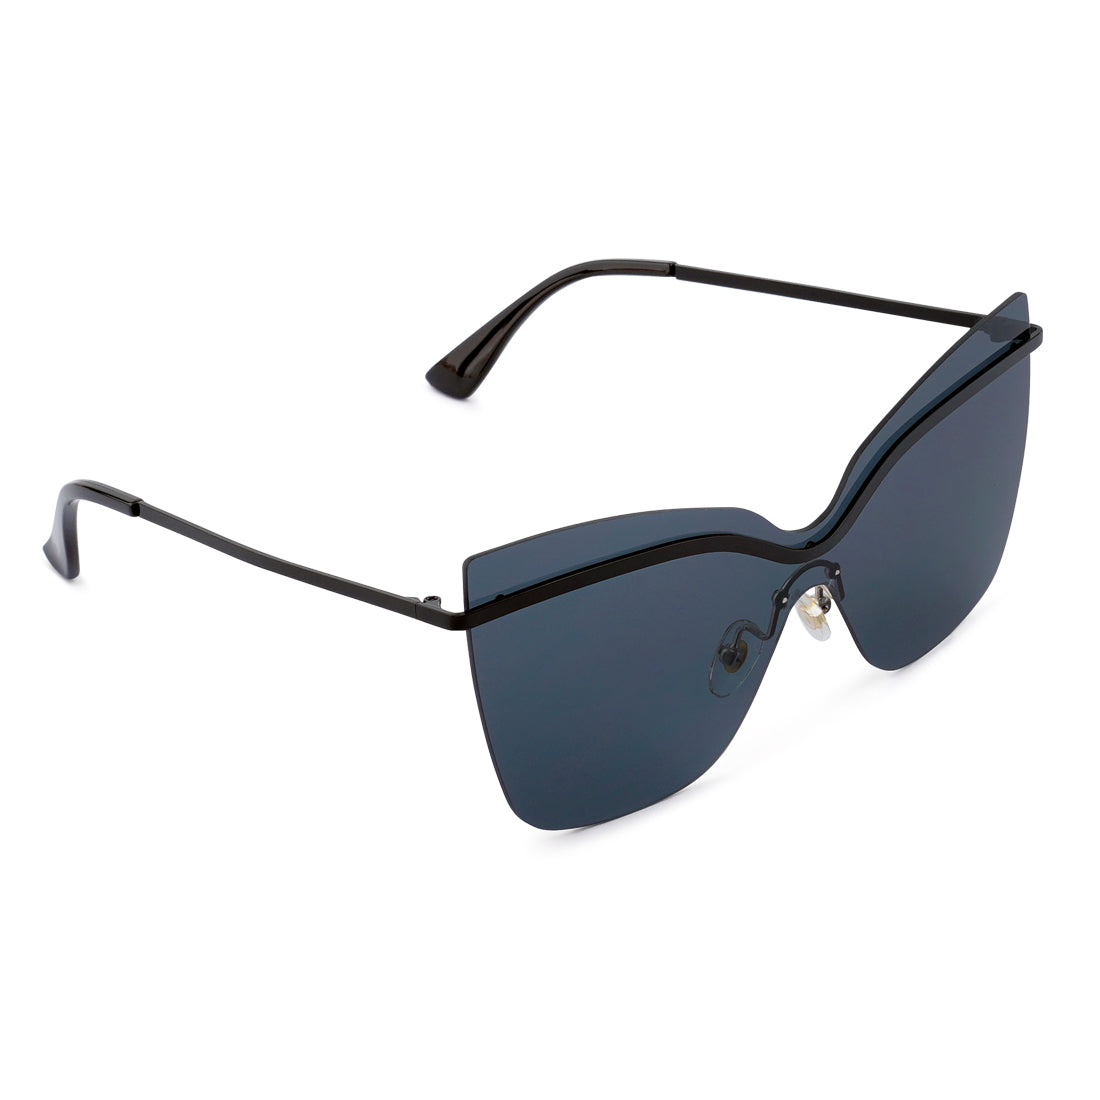 Stylized Rim Cateye Sunglasses In Black